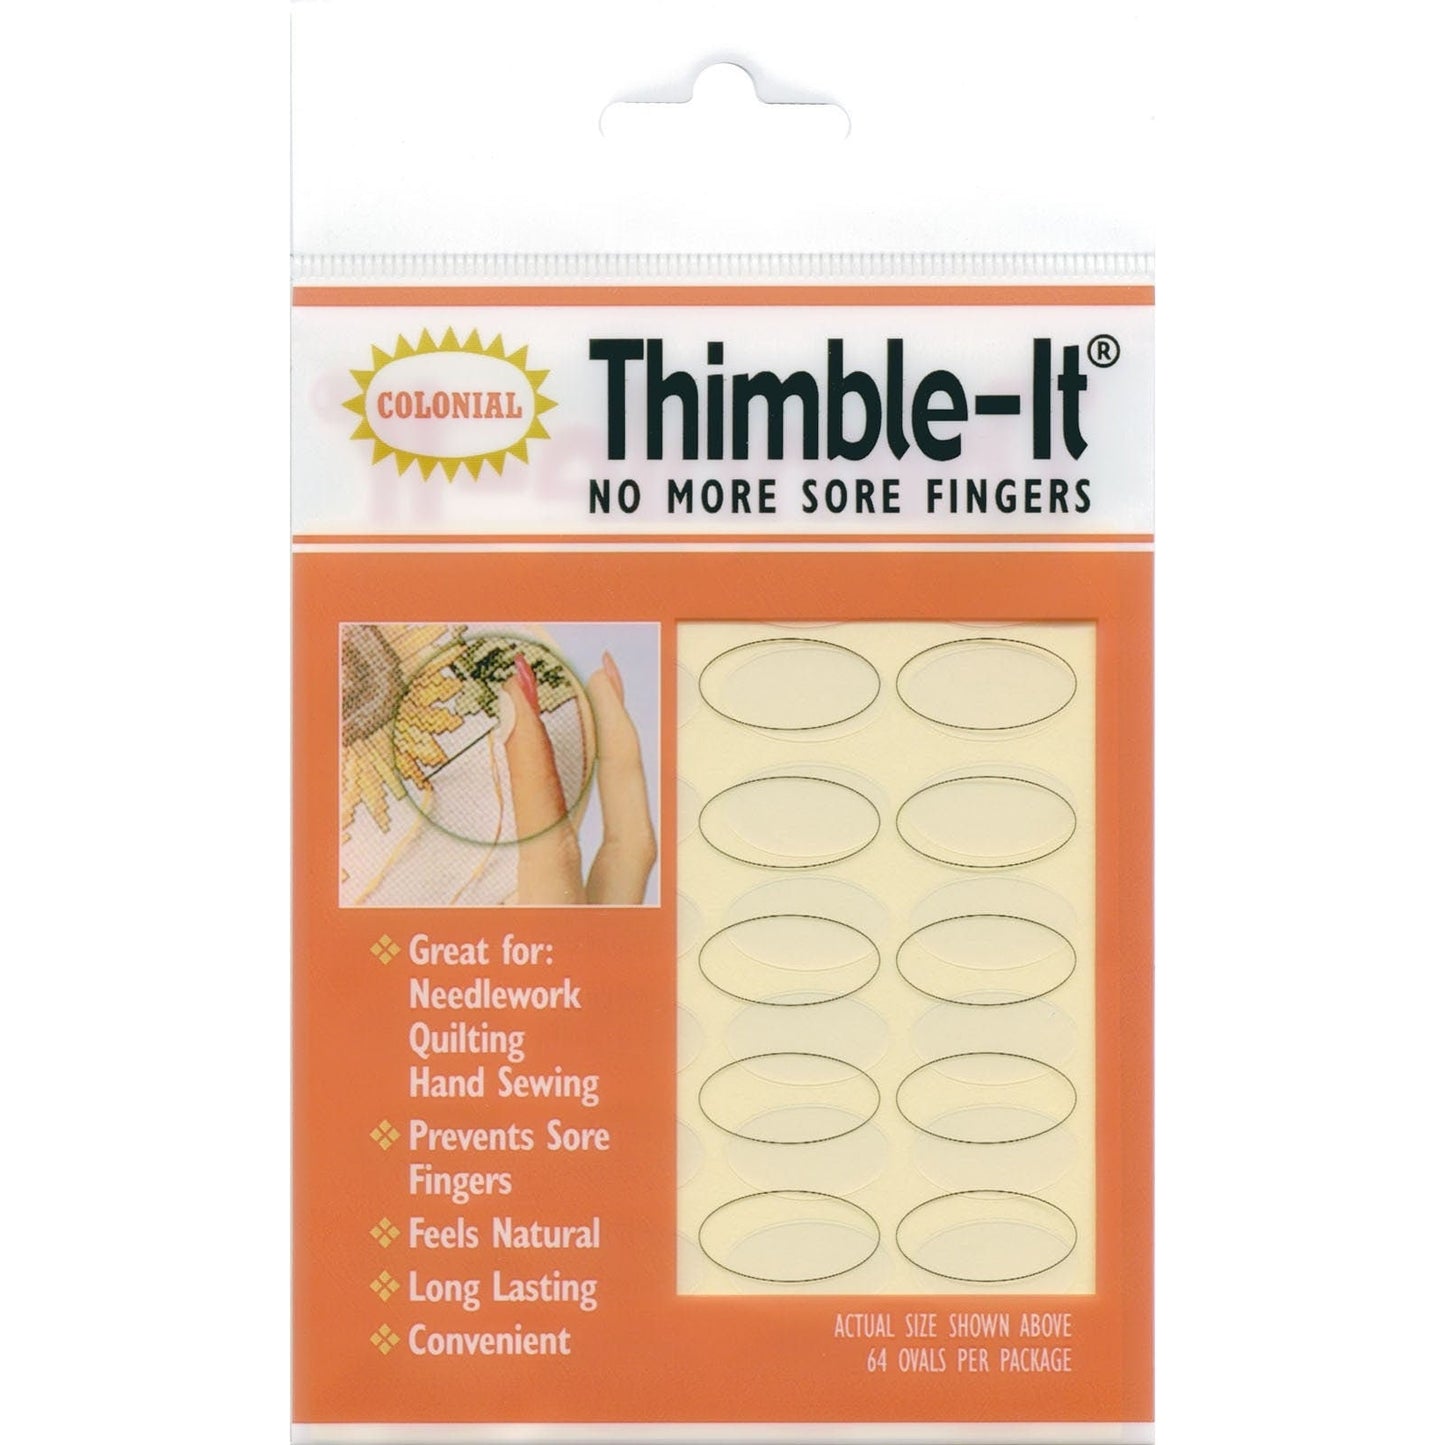 Thimble-It Self-Stick Thimble Pads